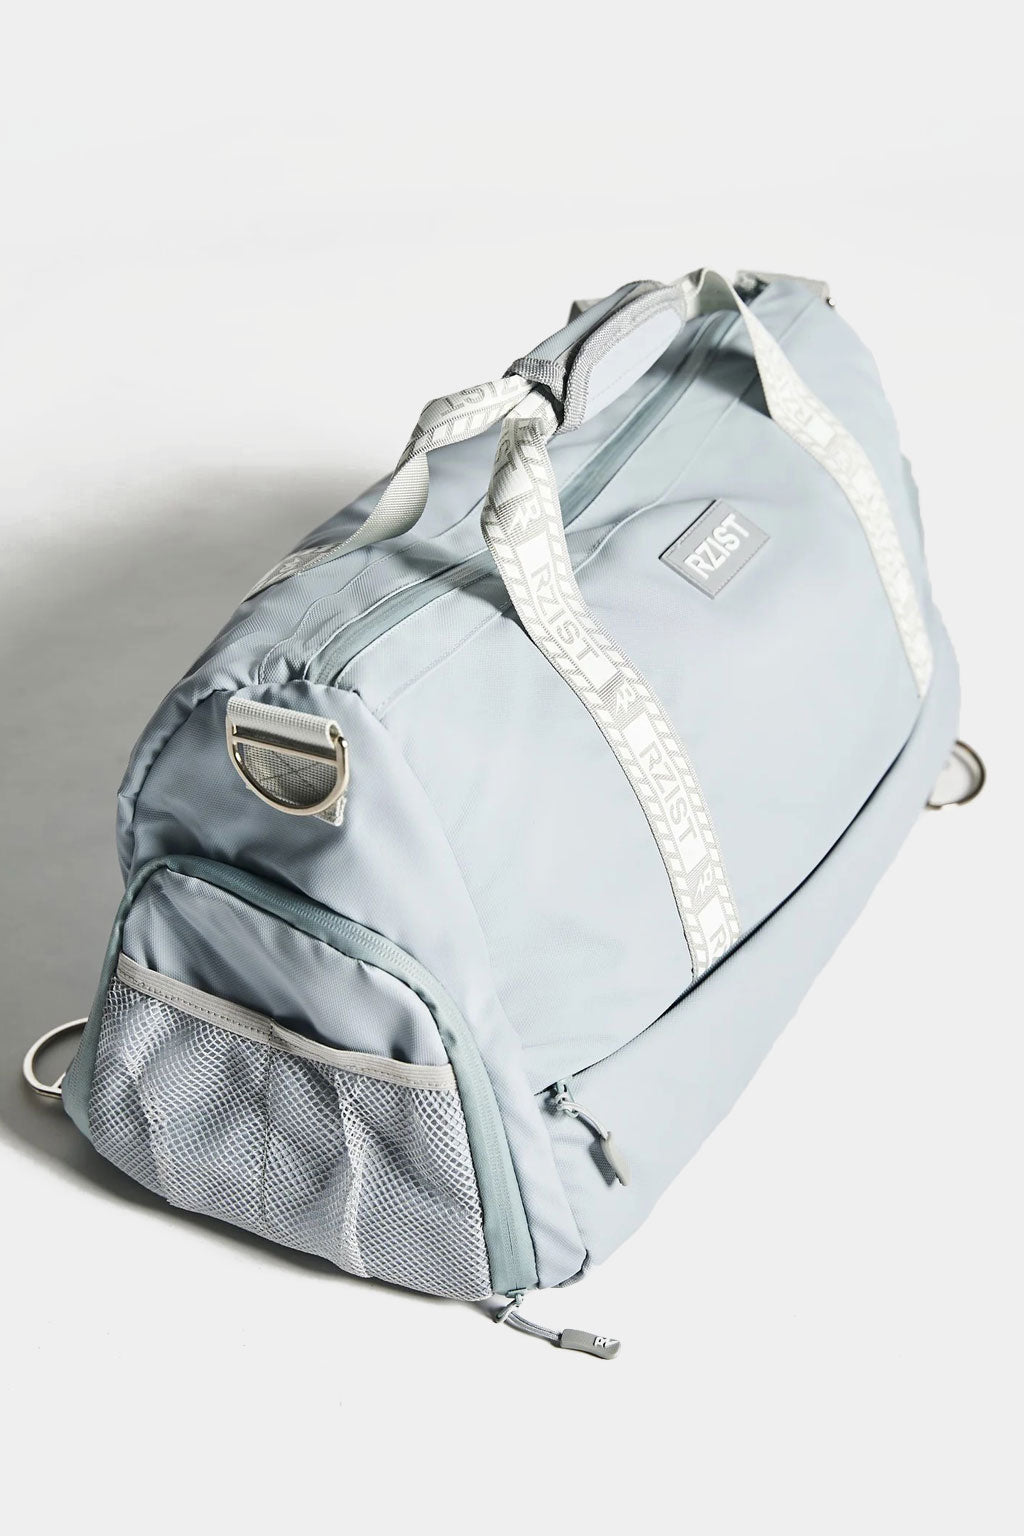 Rzist - Hybrid Duffle Bag